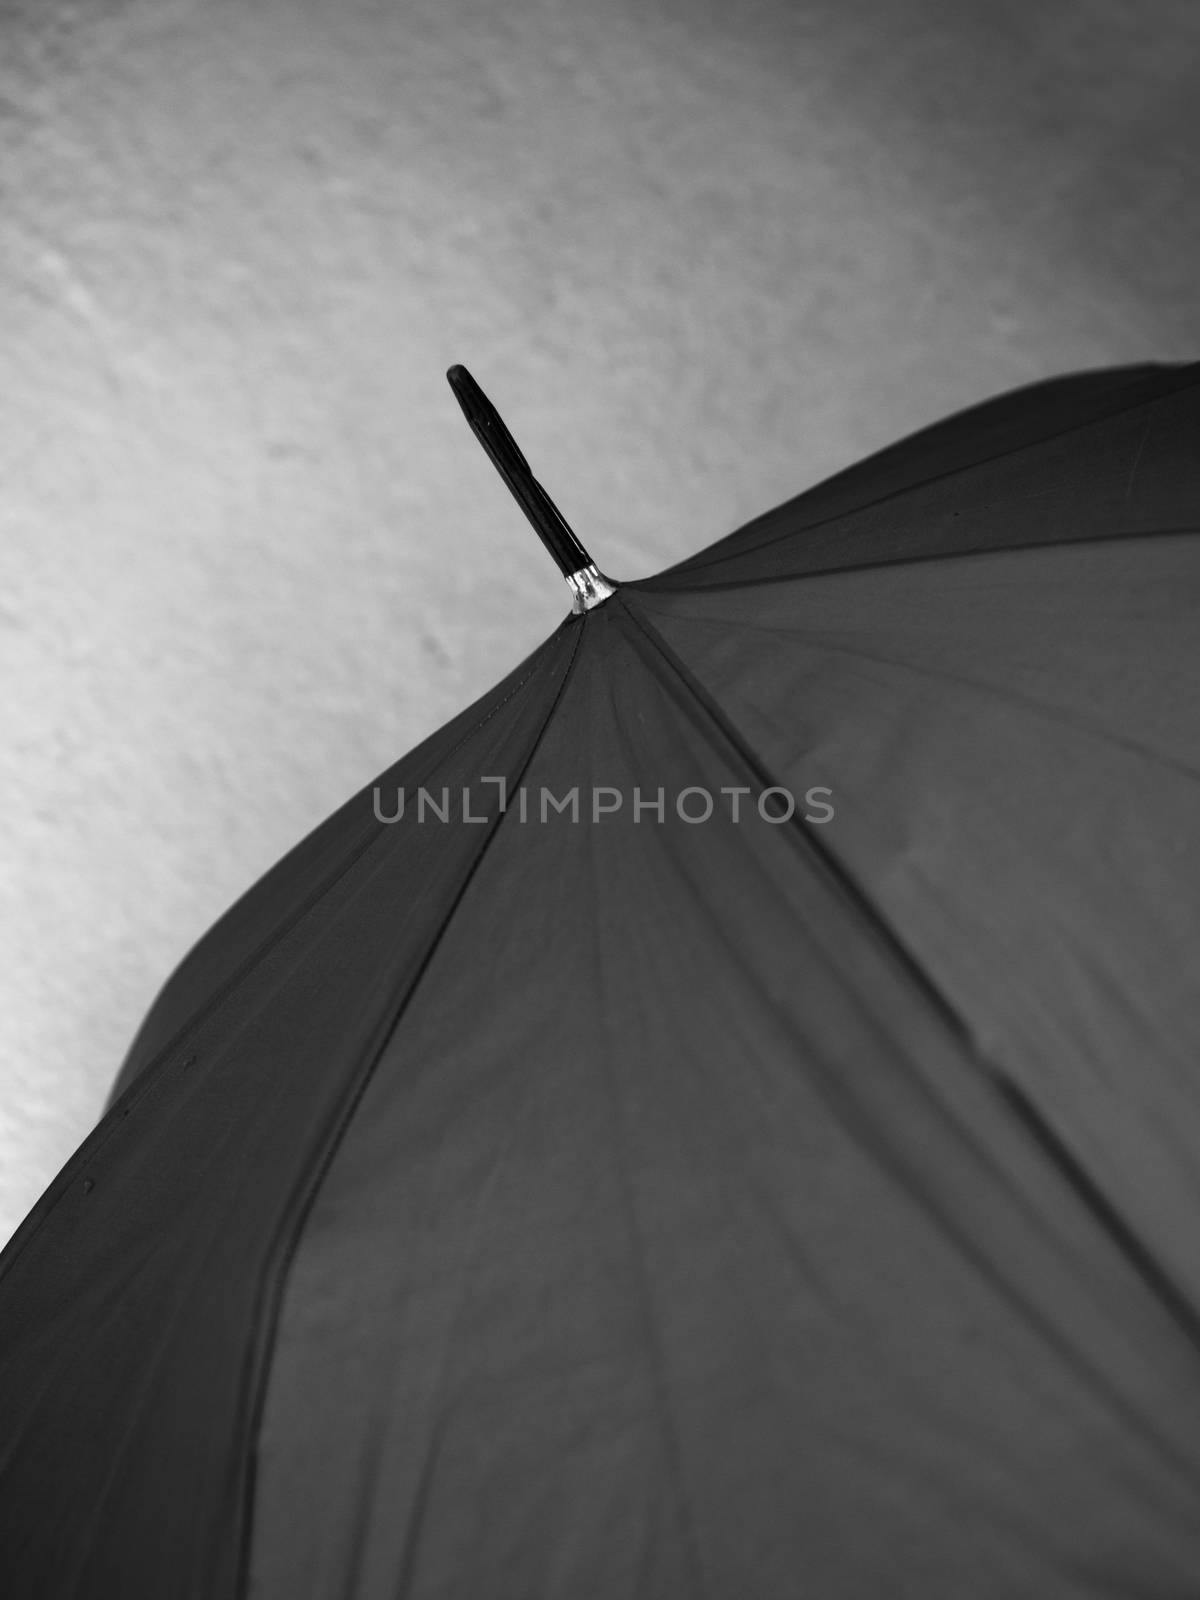 BLACK AND WHITE PHOTO OF CLOSE-UP OF UMBRELLA